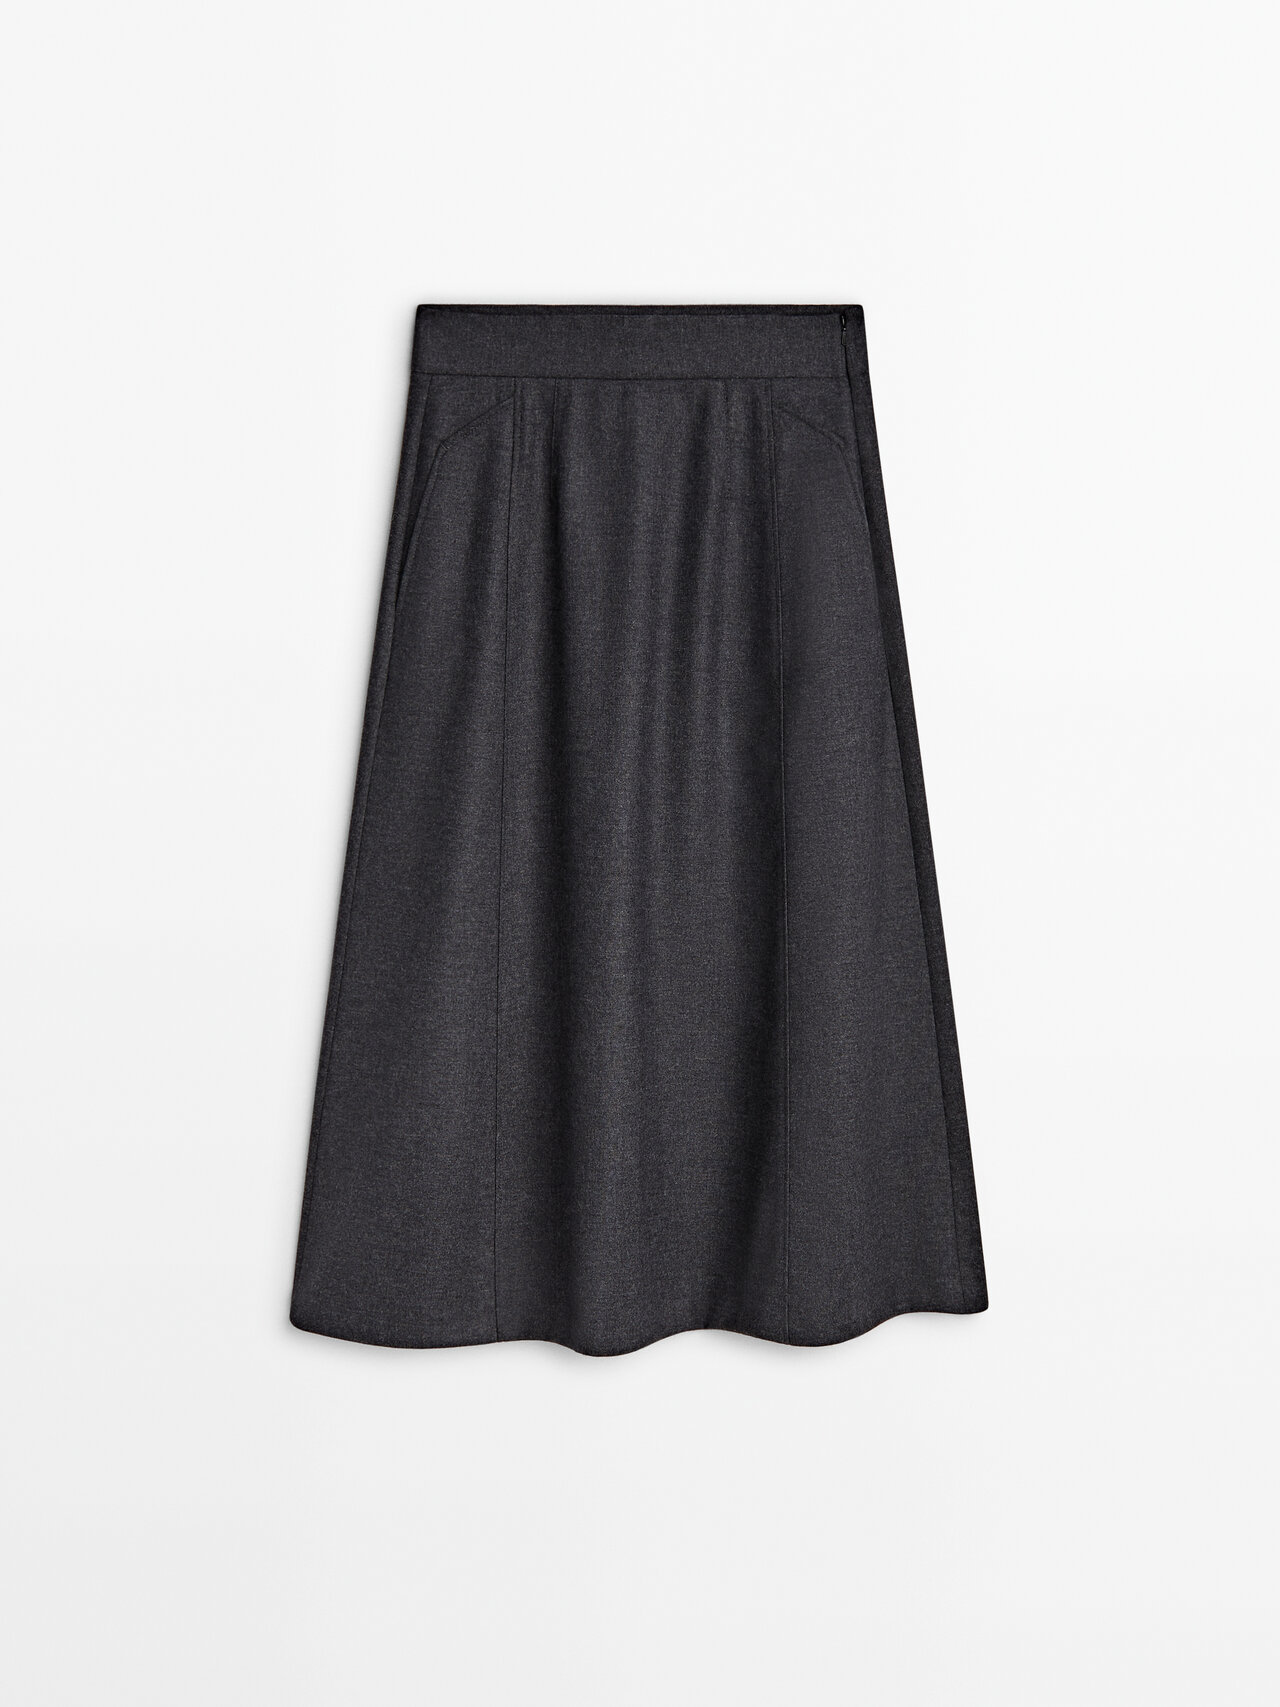 Massimo Dutti Grey Wool Blend Midi Skirt